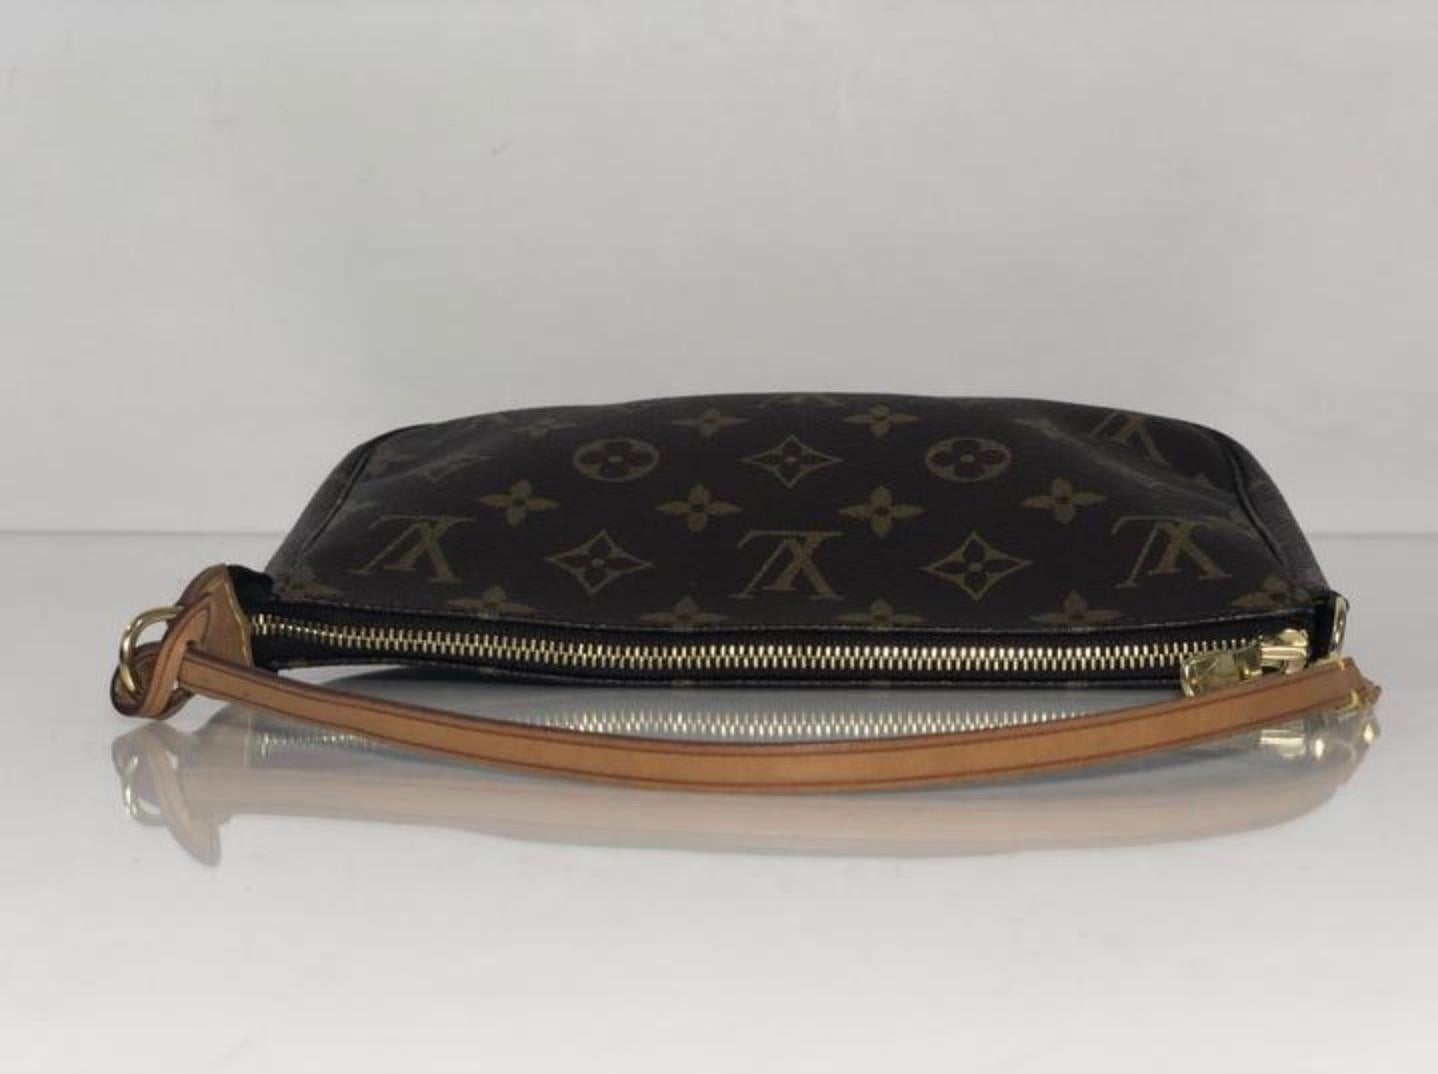  Louis Vuitton Monogram Pochette Accessories Wristlet Handbag In Good Condition For Sale In Saint Charles, IL